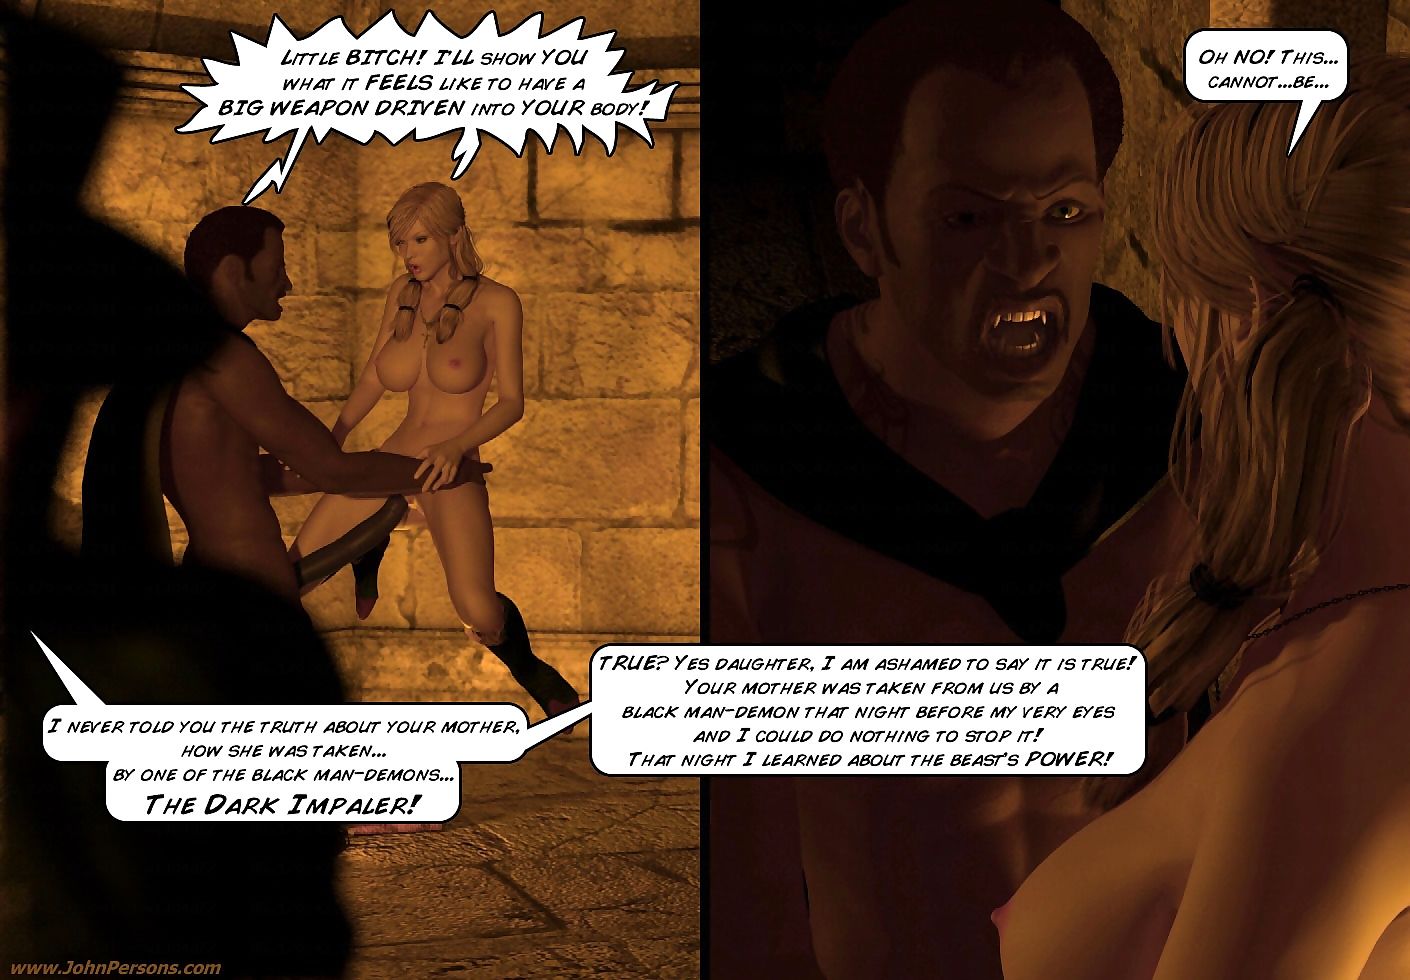 Vampire Slayer- John Persons page 1